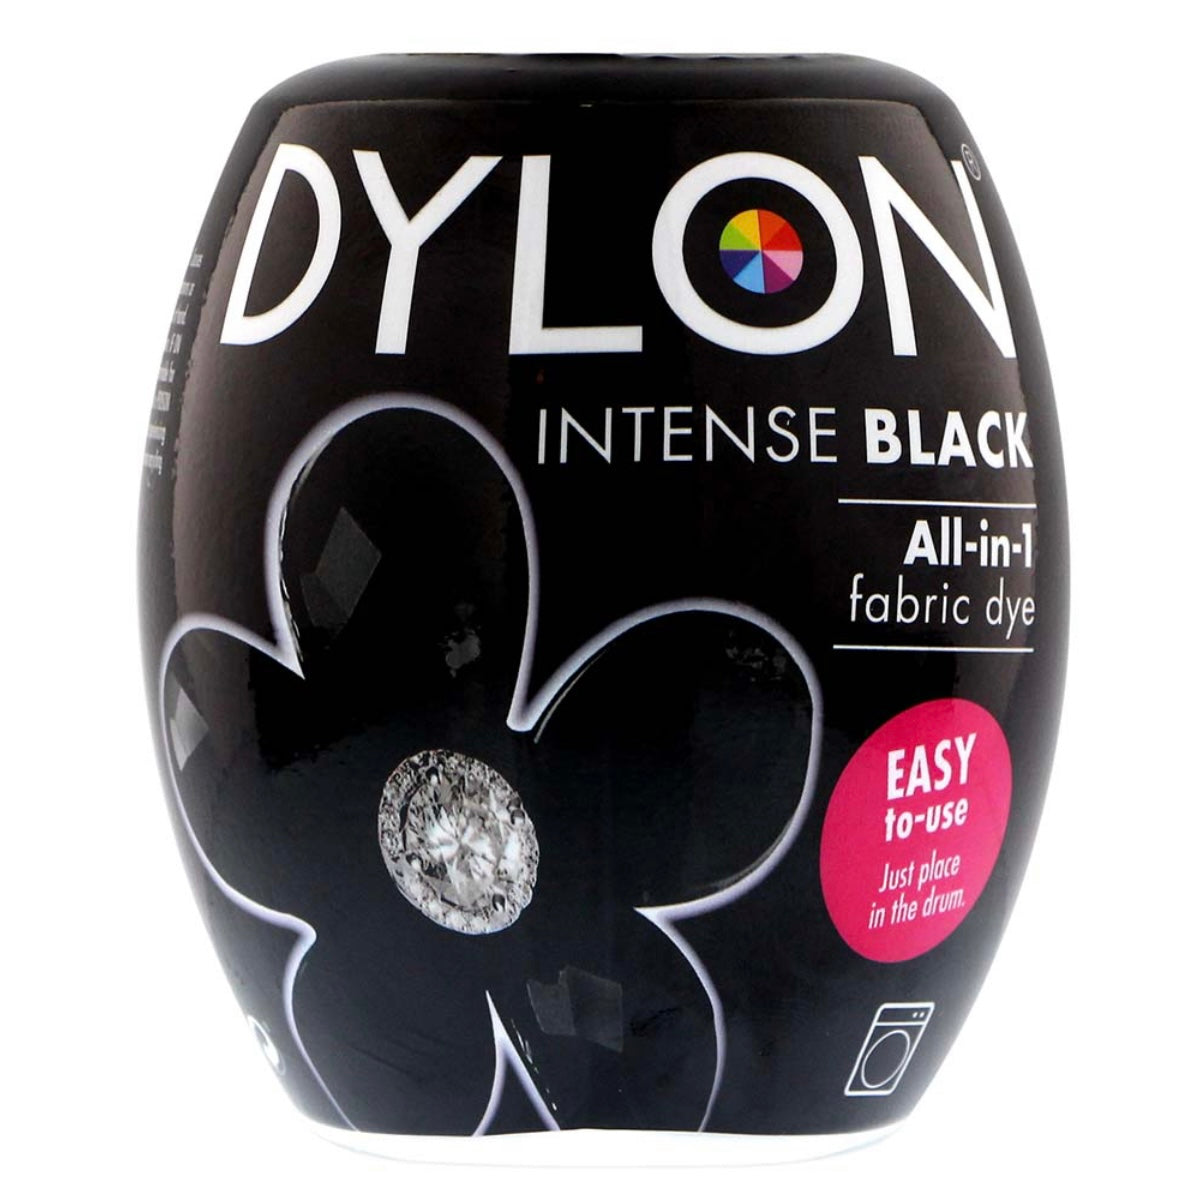 DYLON Washing Machine Fabric Dye Pod for Clothes Soft Furnishings, 350g 